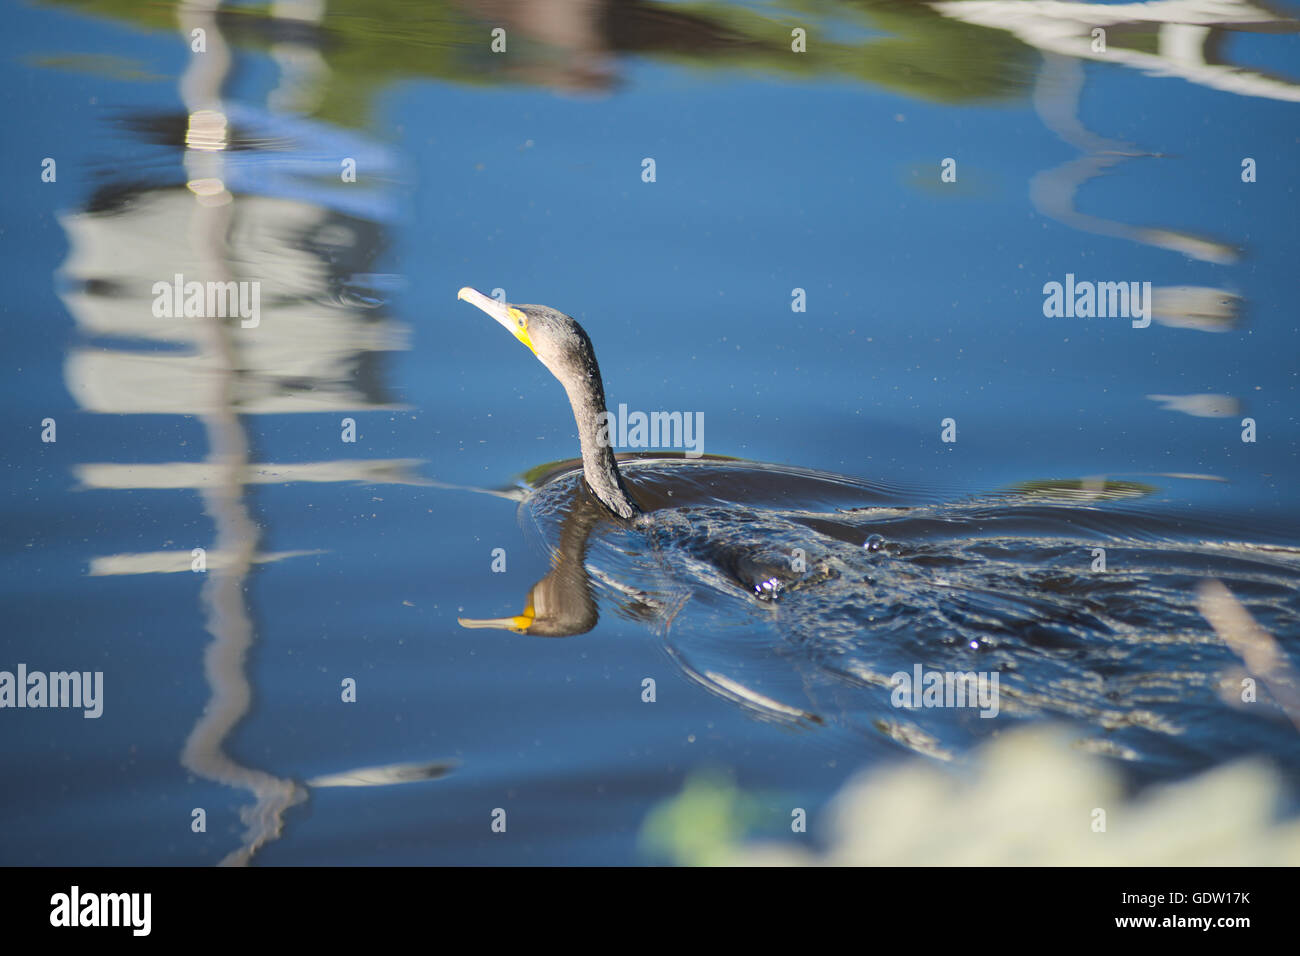 Bird swimming in the water Stock Photo